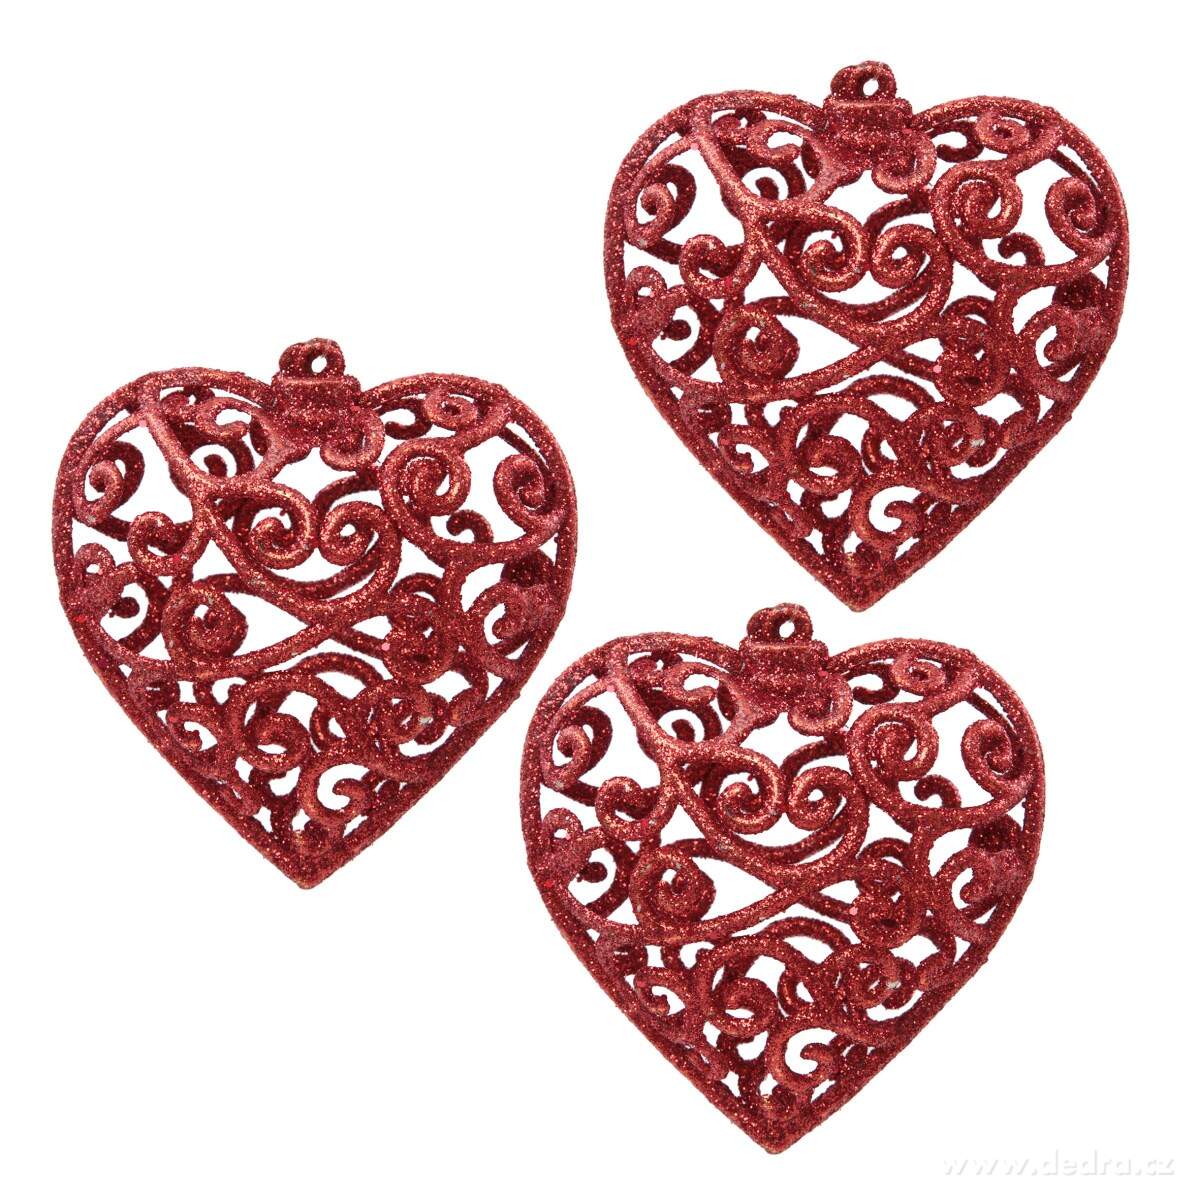 Karácsonyi dísz szív formájú 3 darab - piros